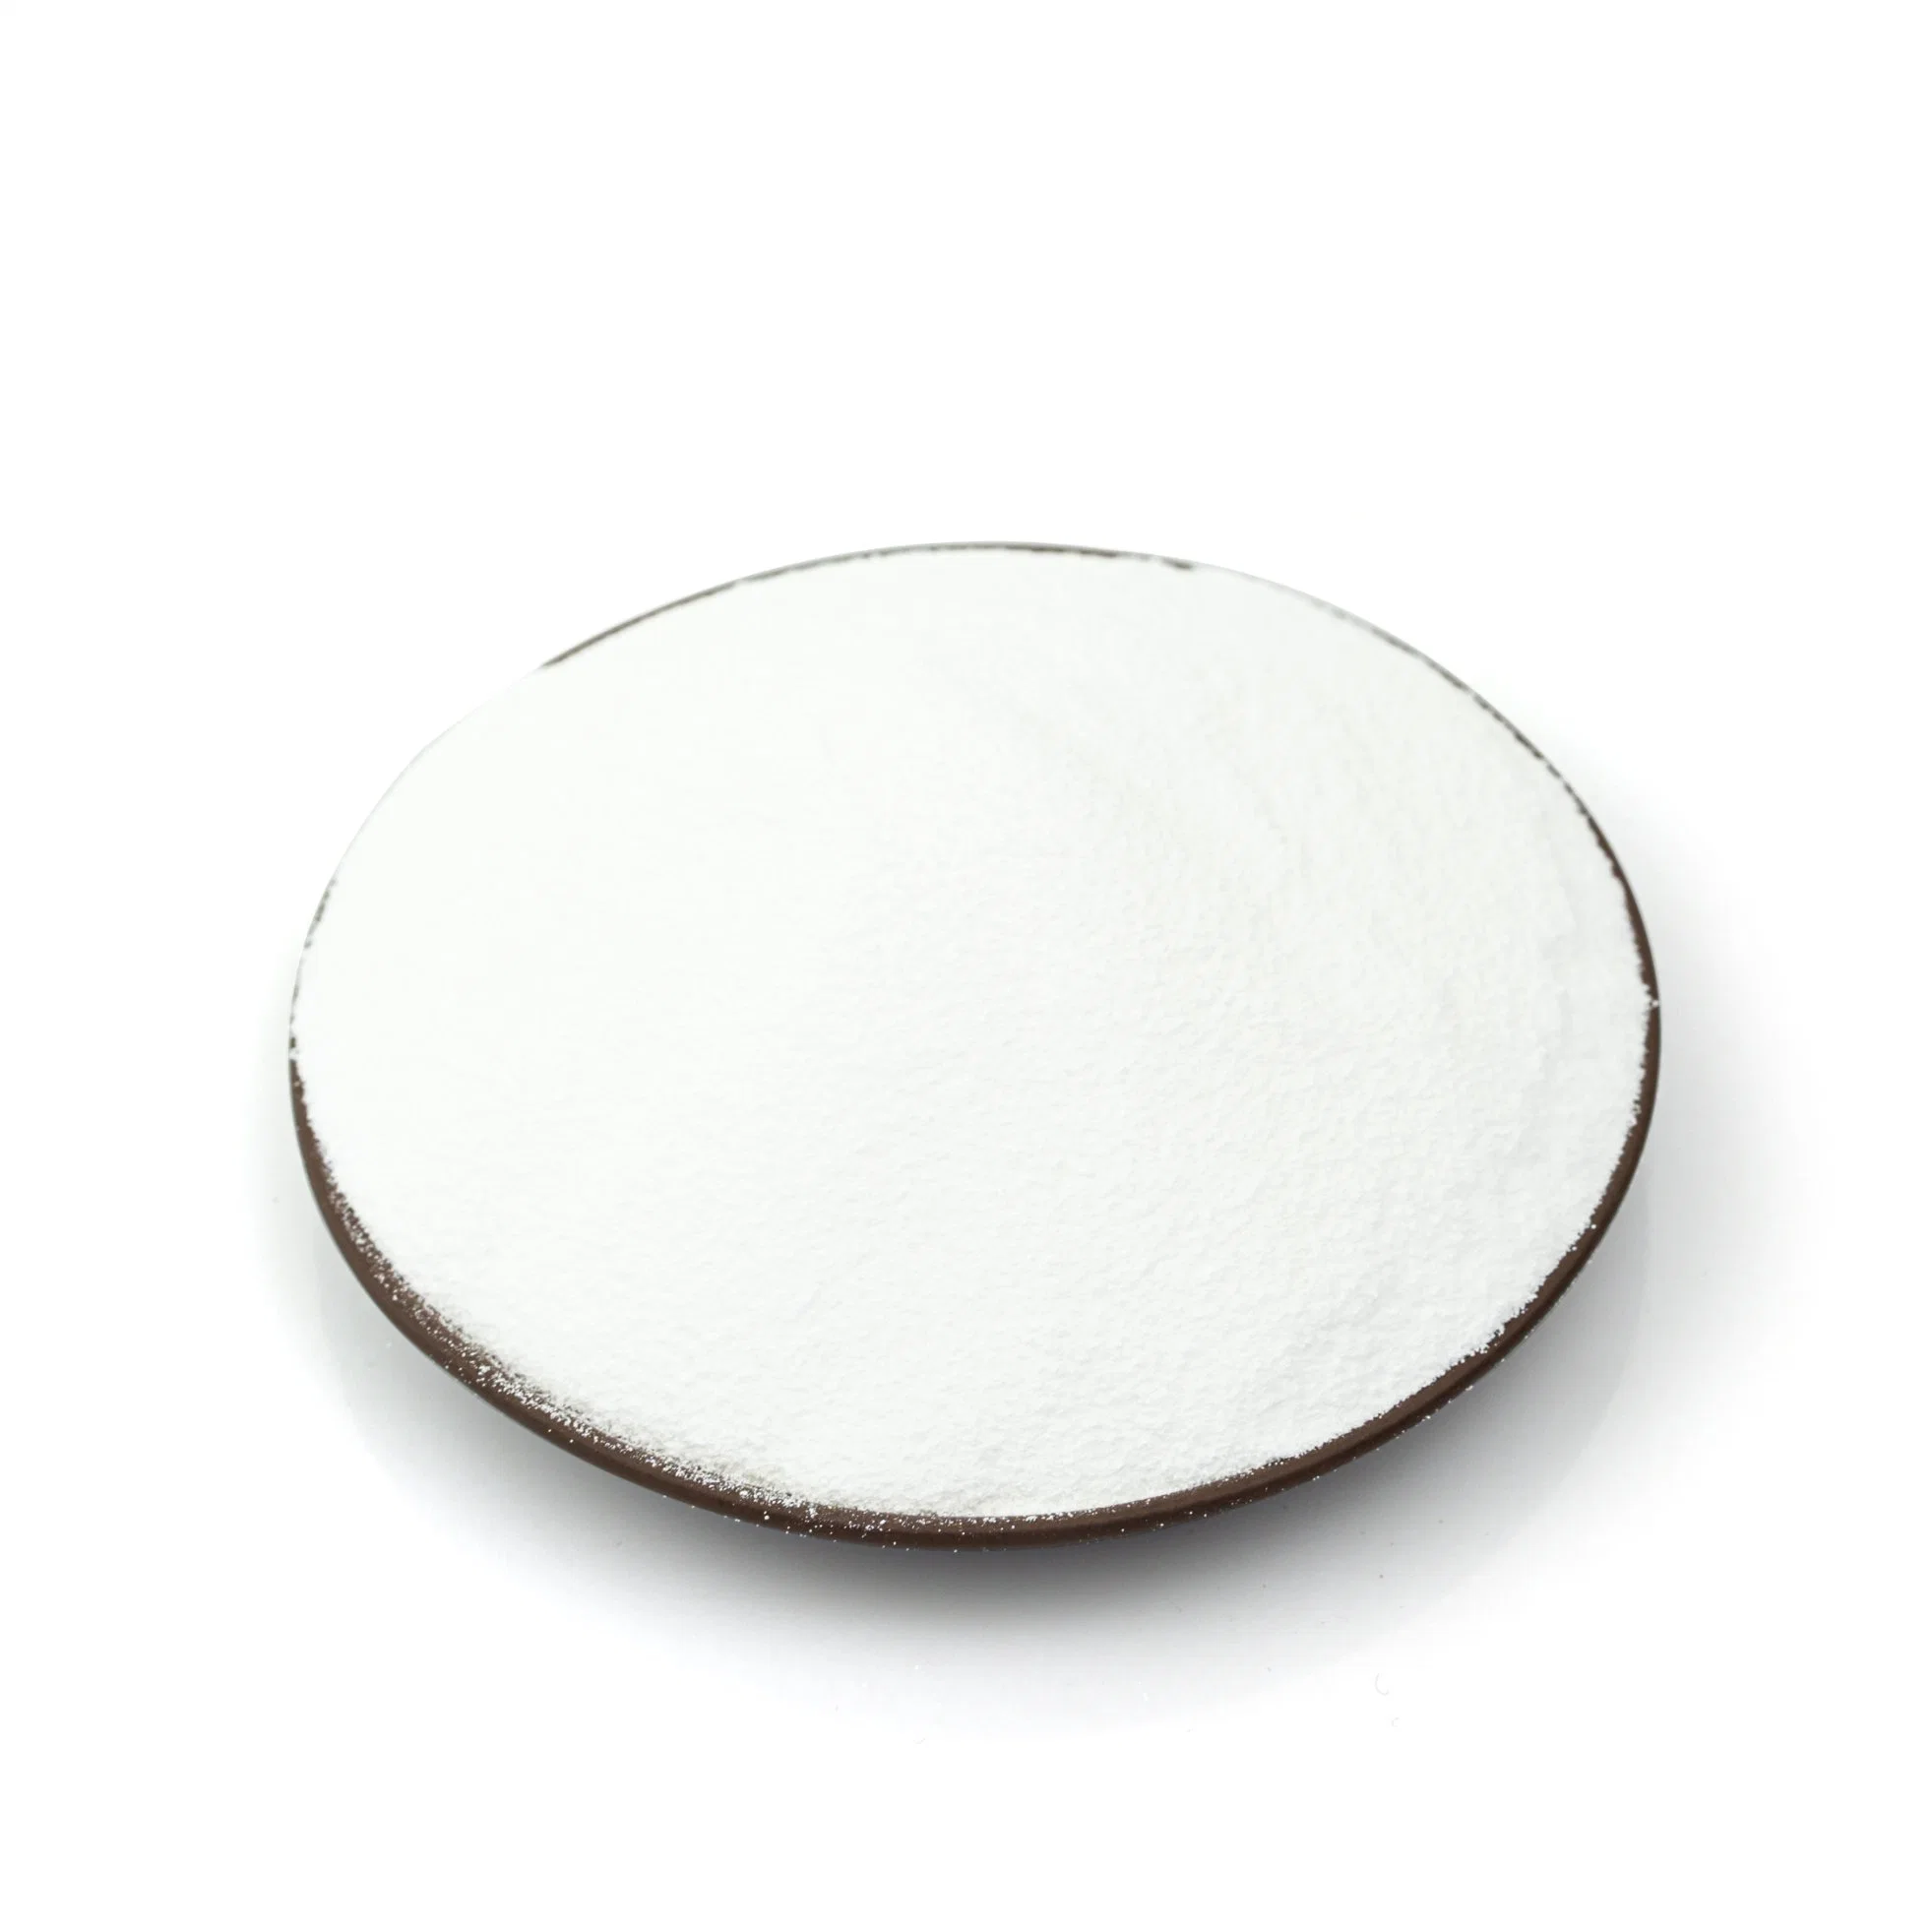 White Powder 100% Virgin Suspension Resin Calcium Carbide Method PVC Resin Sg5/Sg3/Sg7